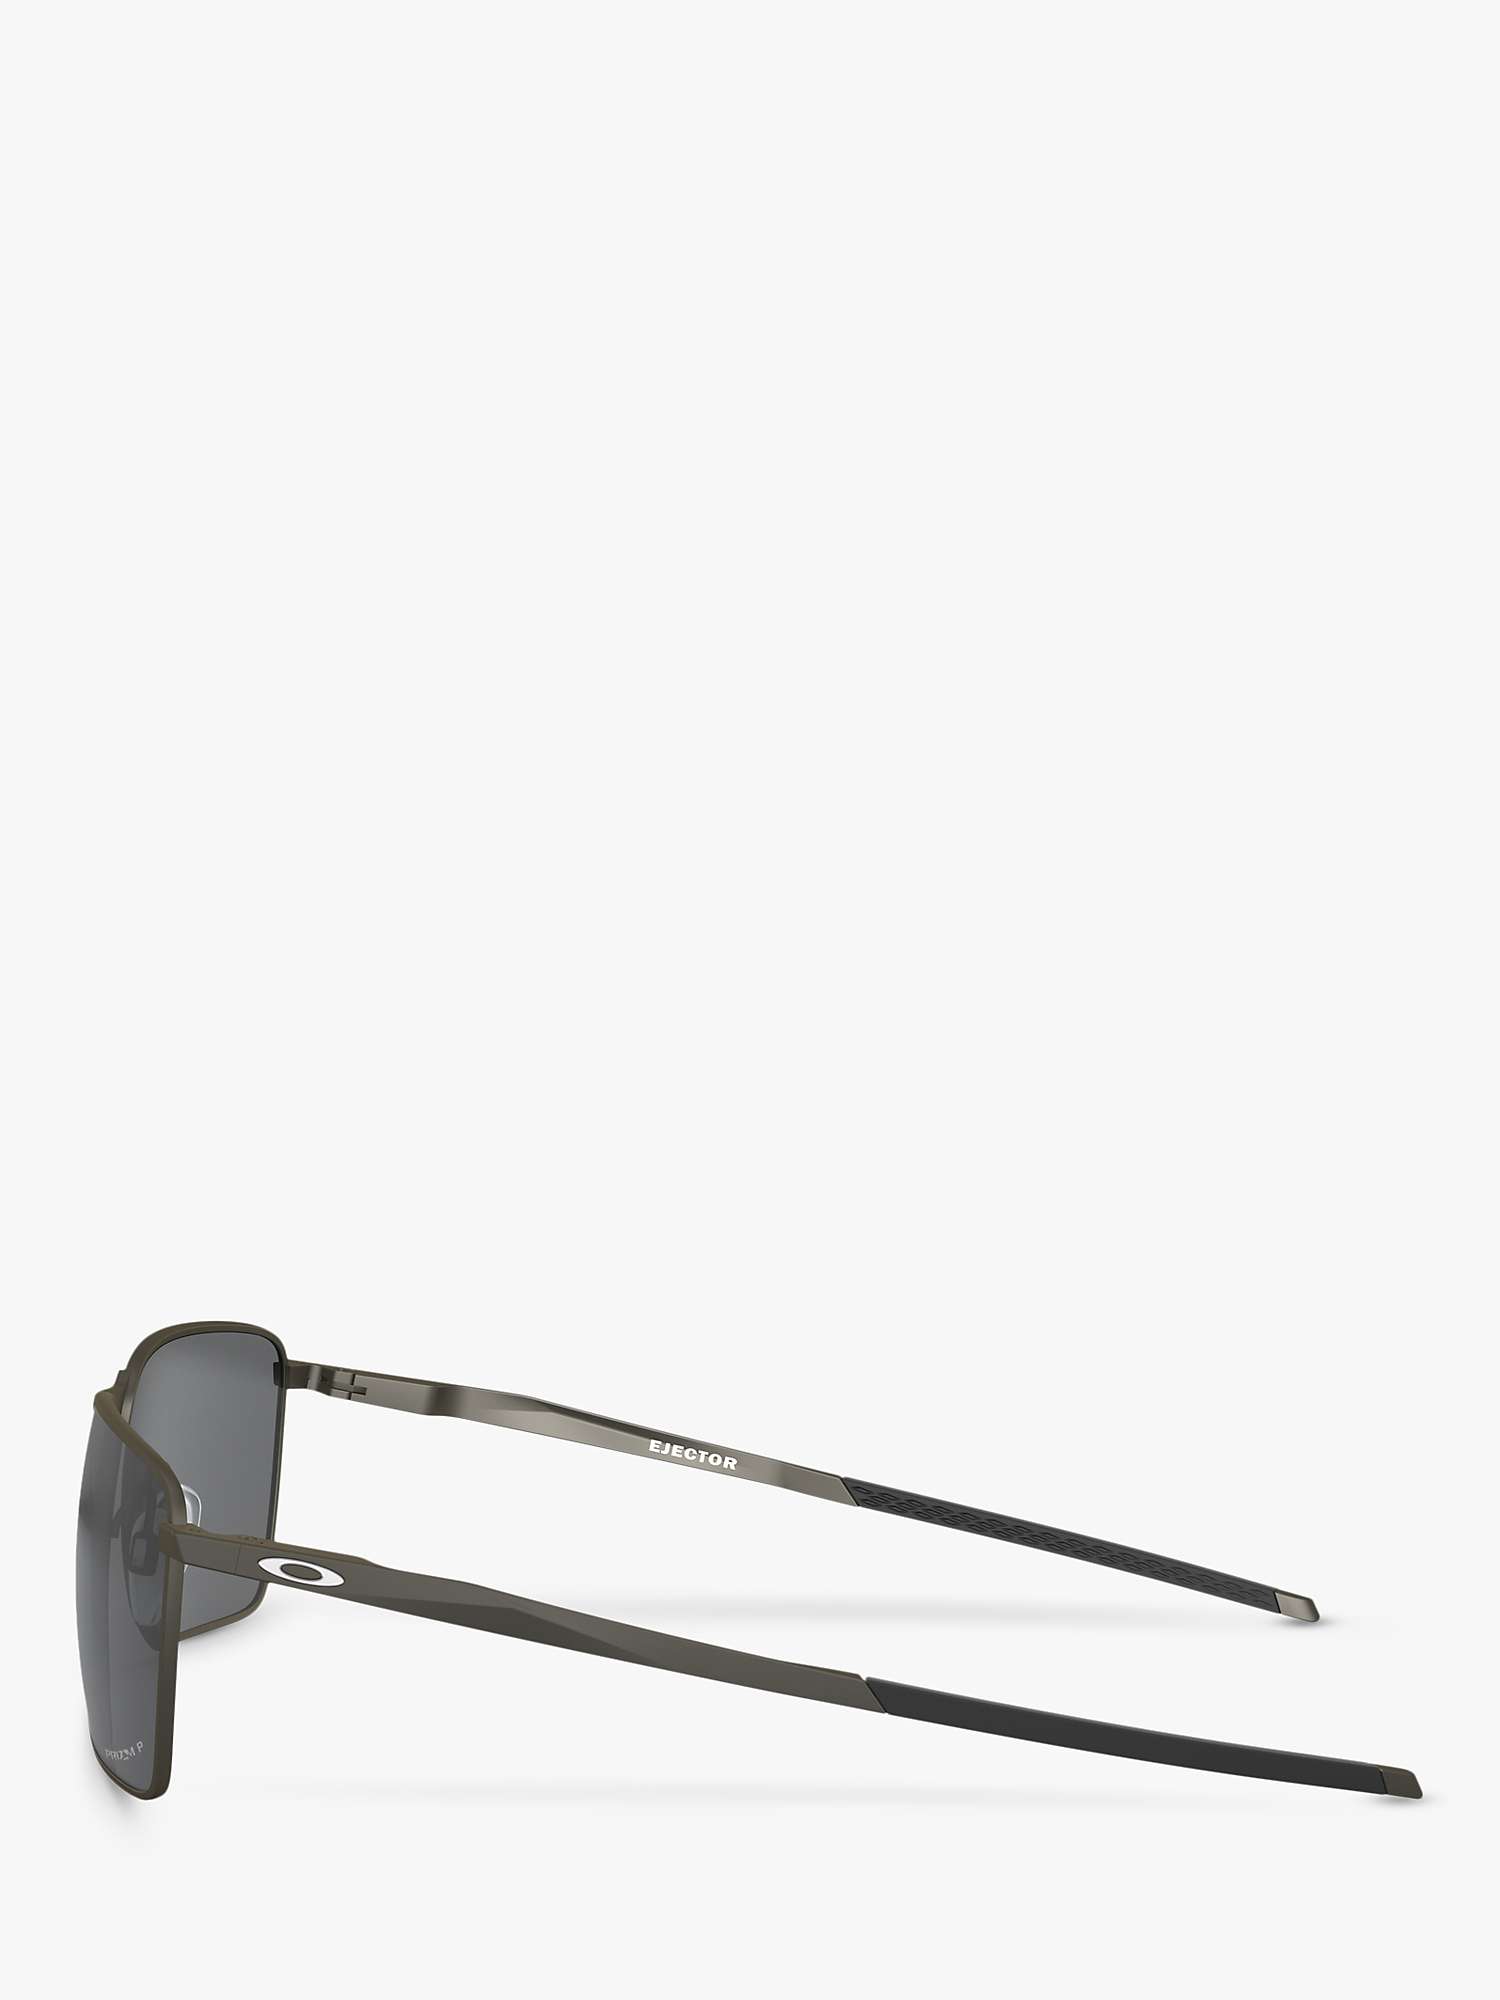 Buy Oakley OO4142 Men's Polarised Rectangular Sunglasses, Carbon Online at johnlewis.com